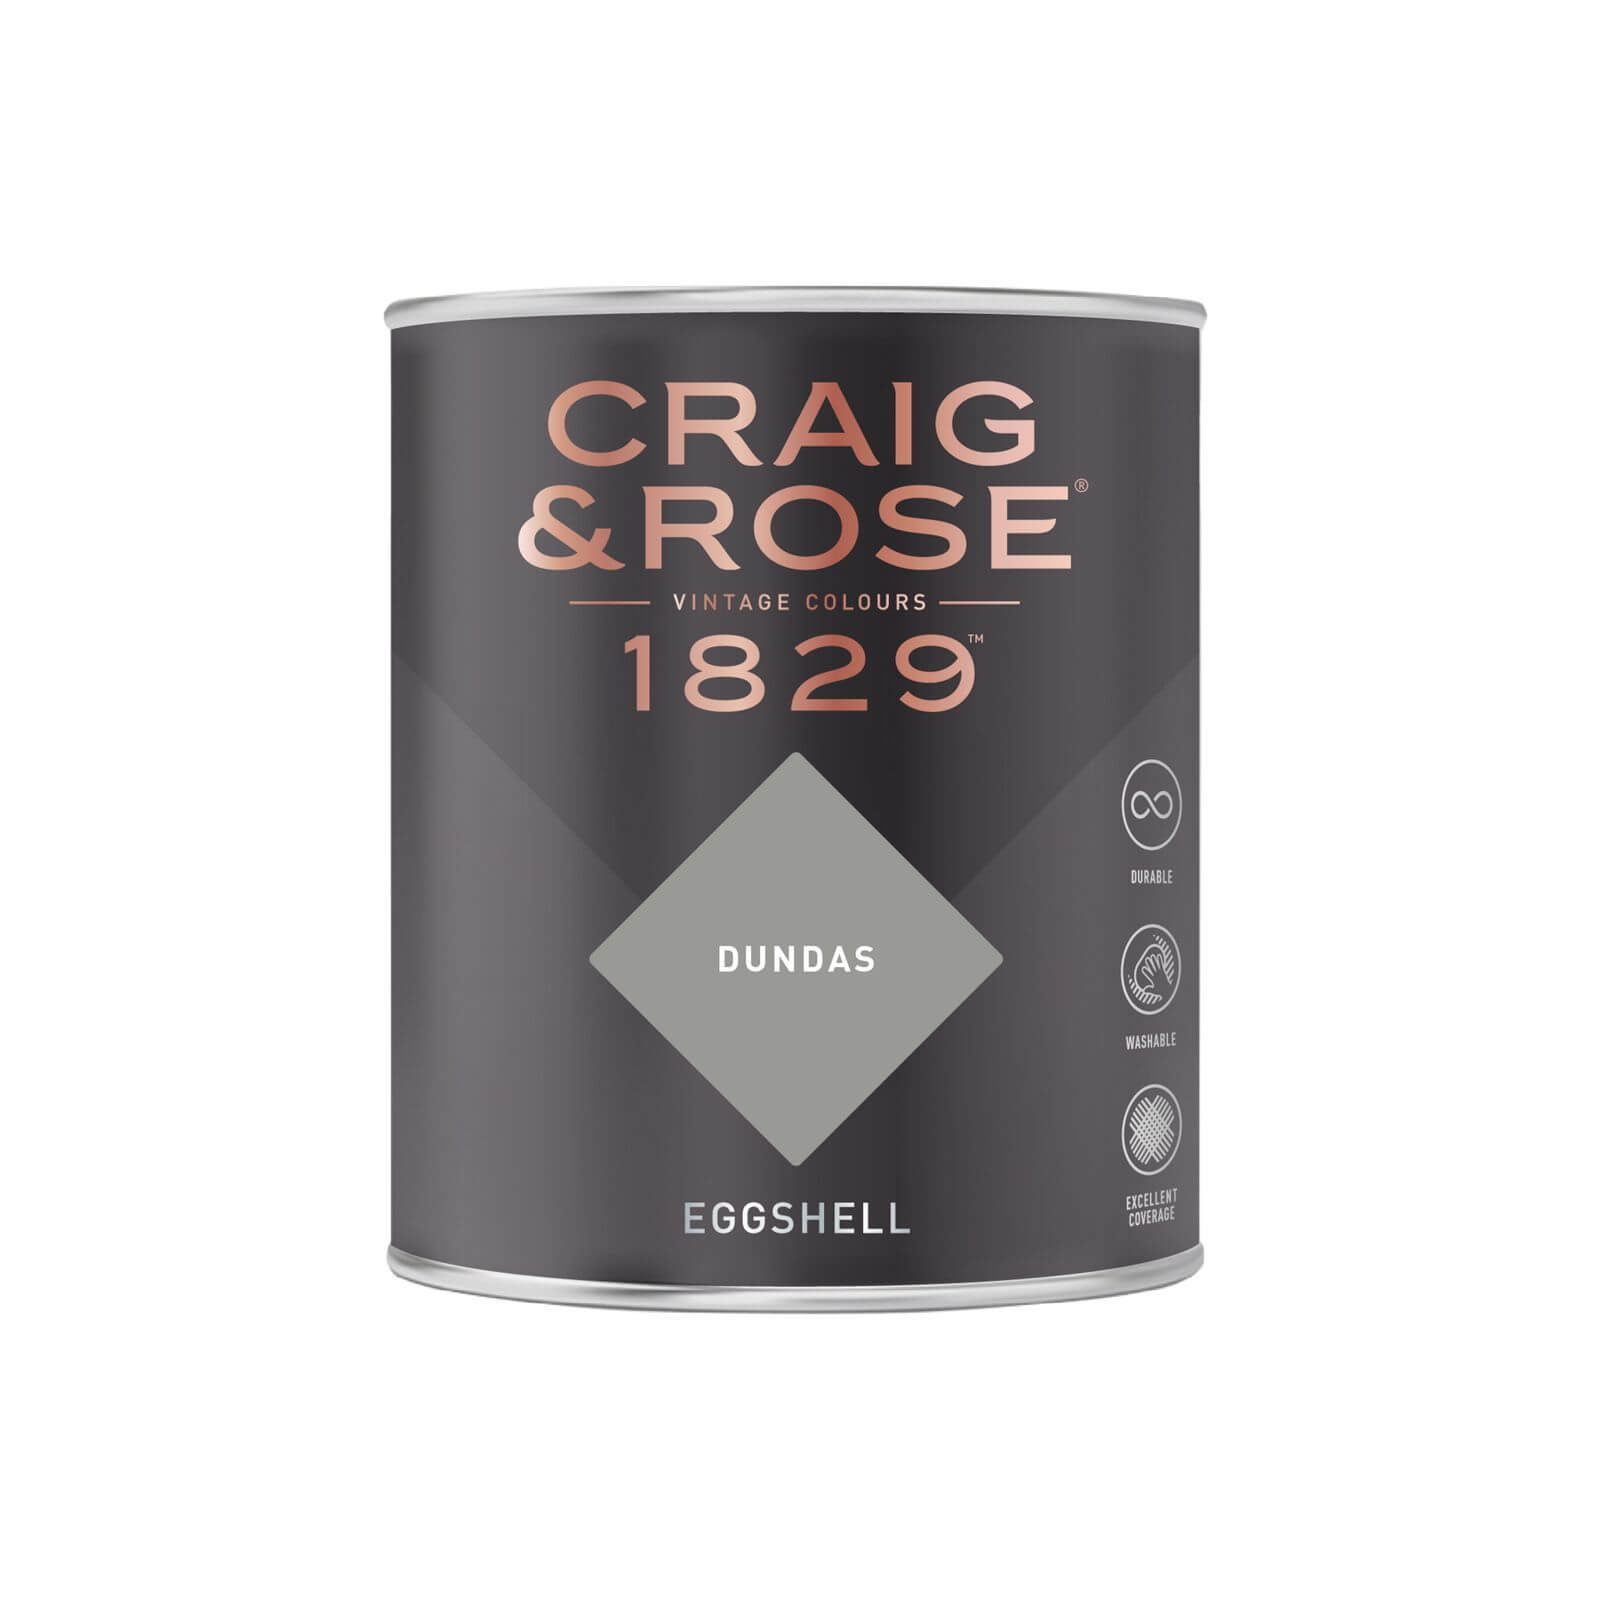 Craig & Rose 1829 Eggshell Paint Dundas - 750ml